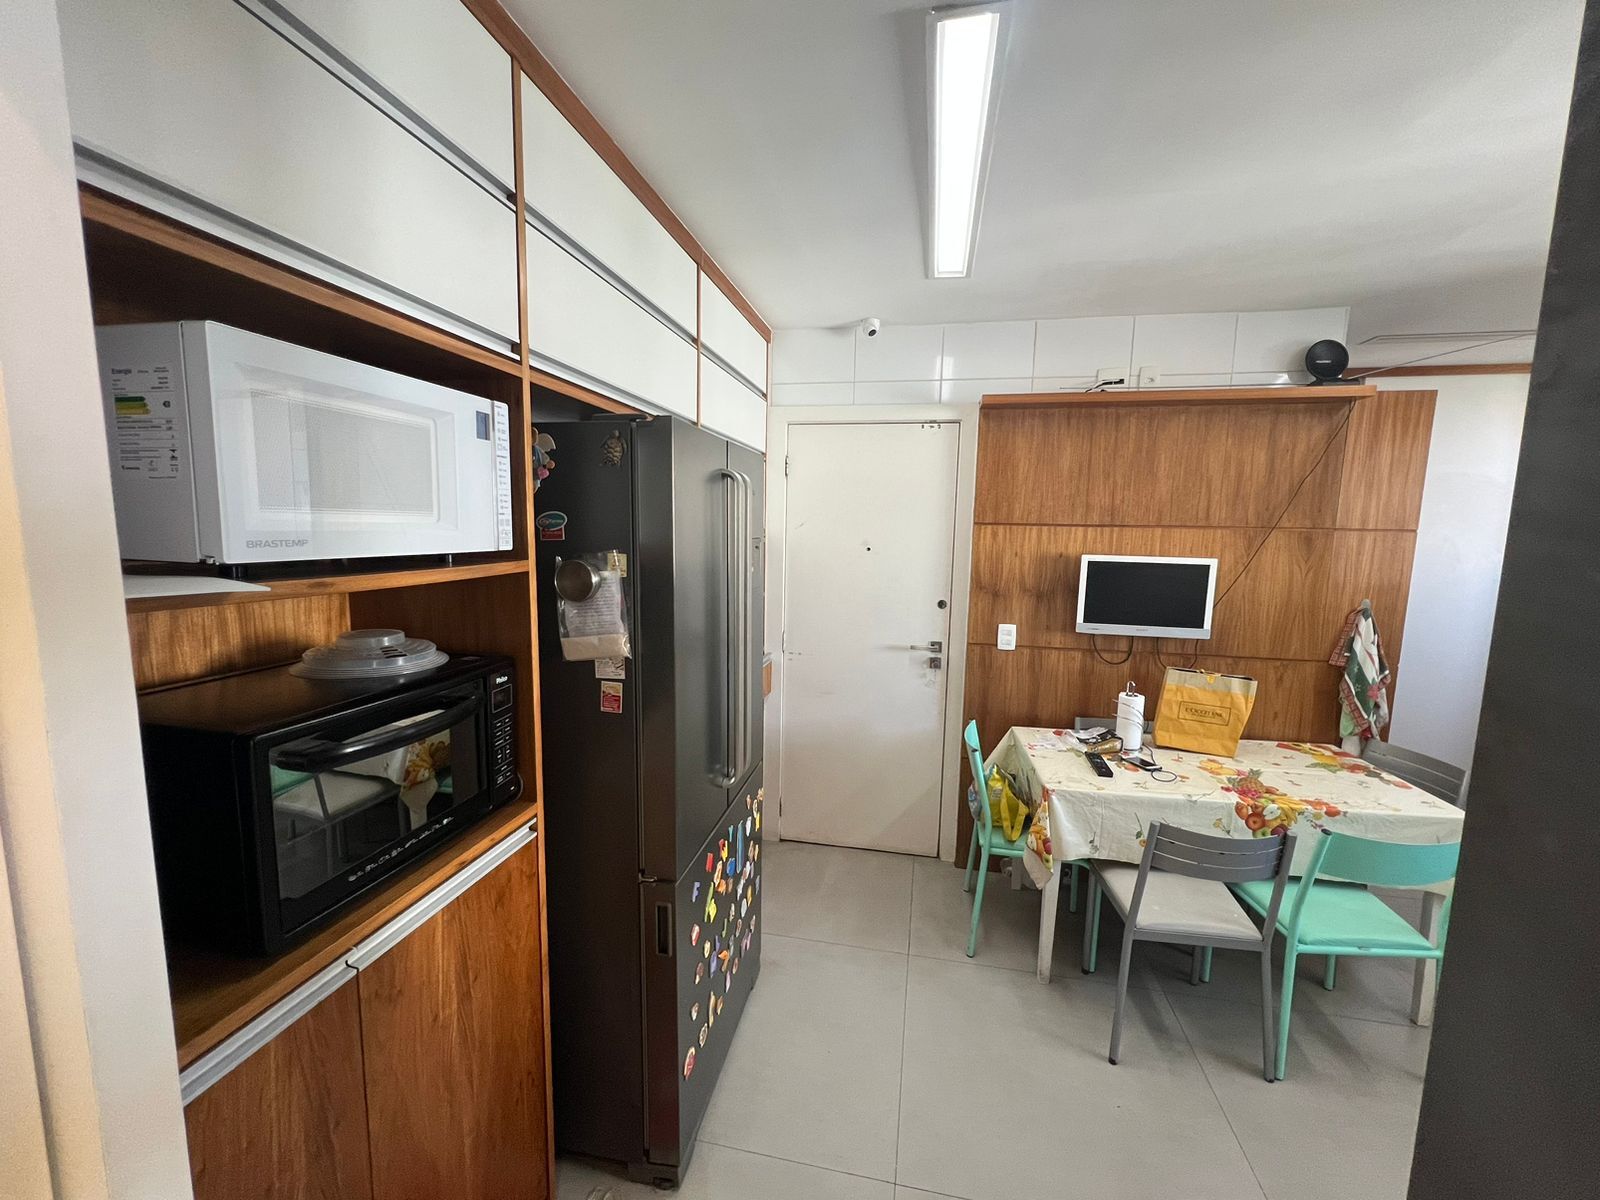 Cobertura no Condomínio Residencial Via Privilege 480m2 - Barra da Tijuca